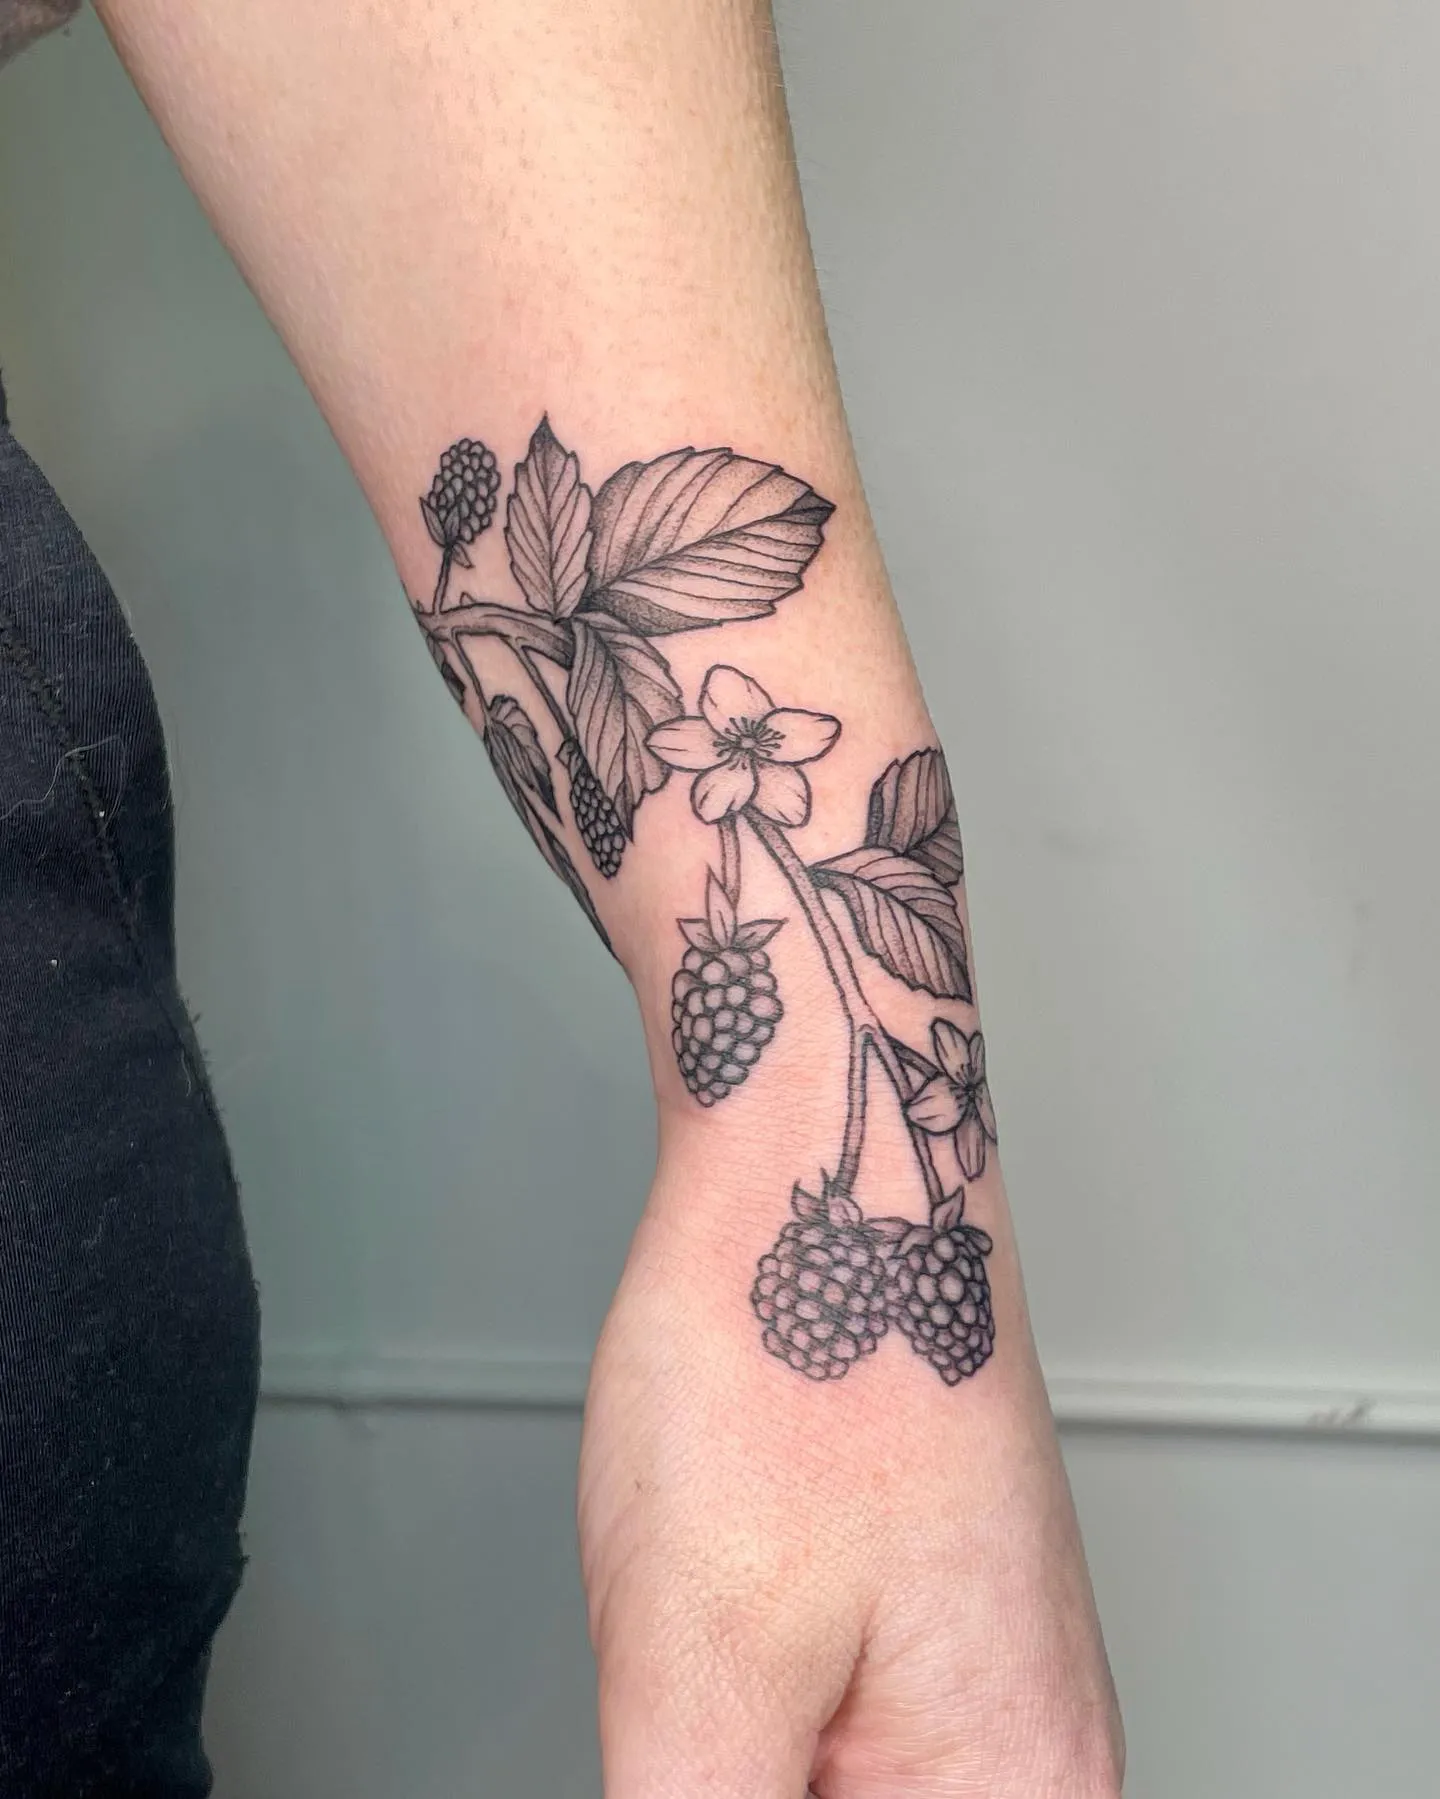 Delicate Wrist Tattoo Featuring Blackberry Vine